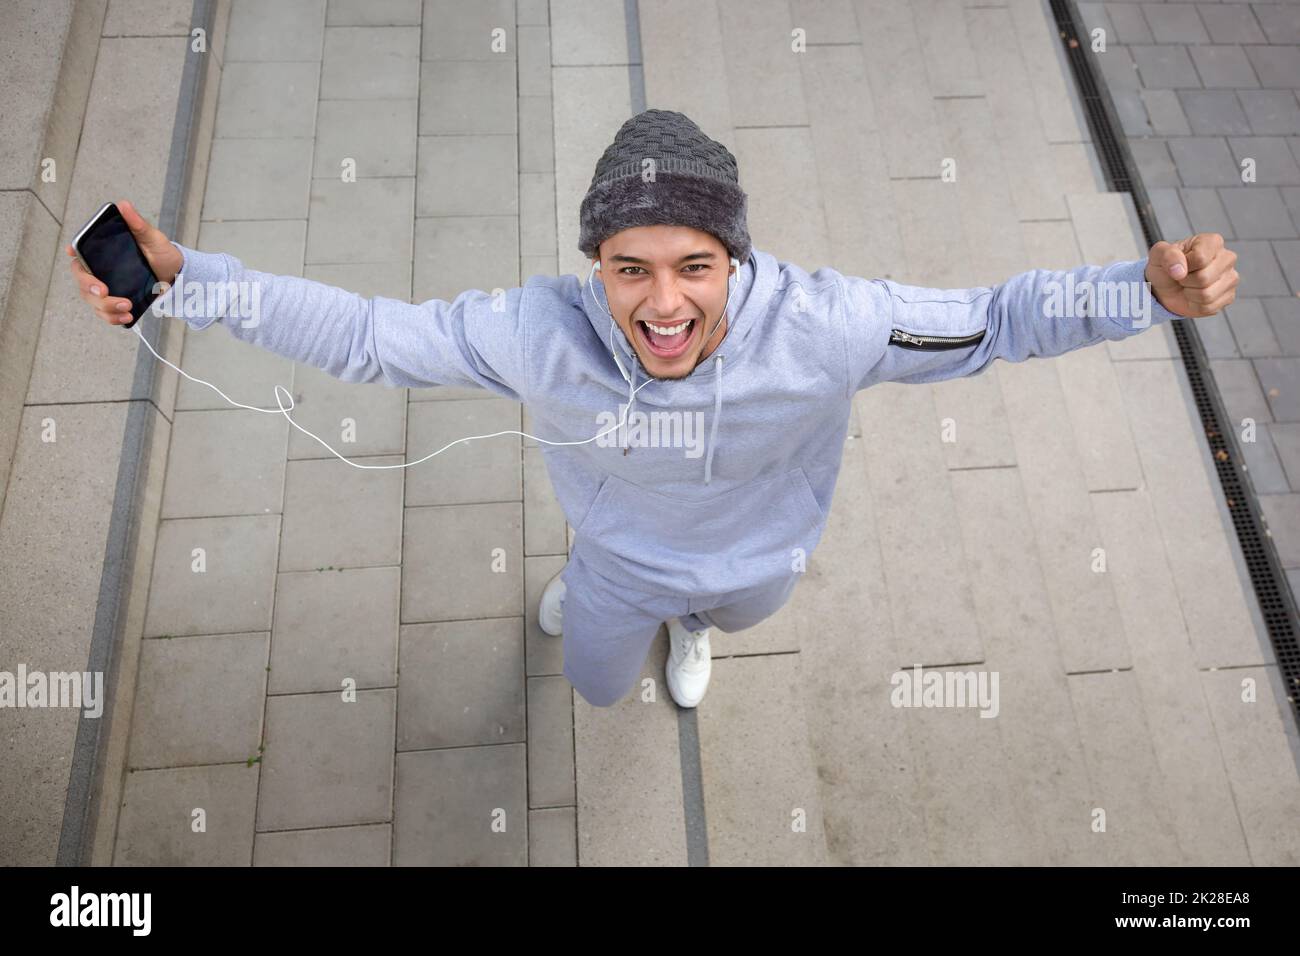 Success successful happy smiling young latin man fitness sport sports joy pleasure Stock Photo